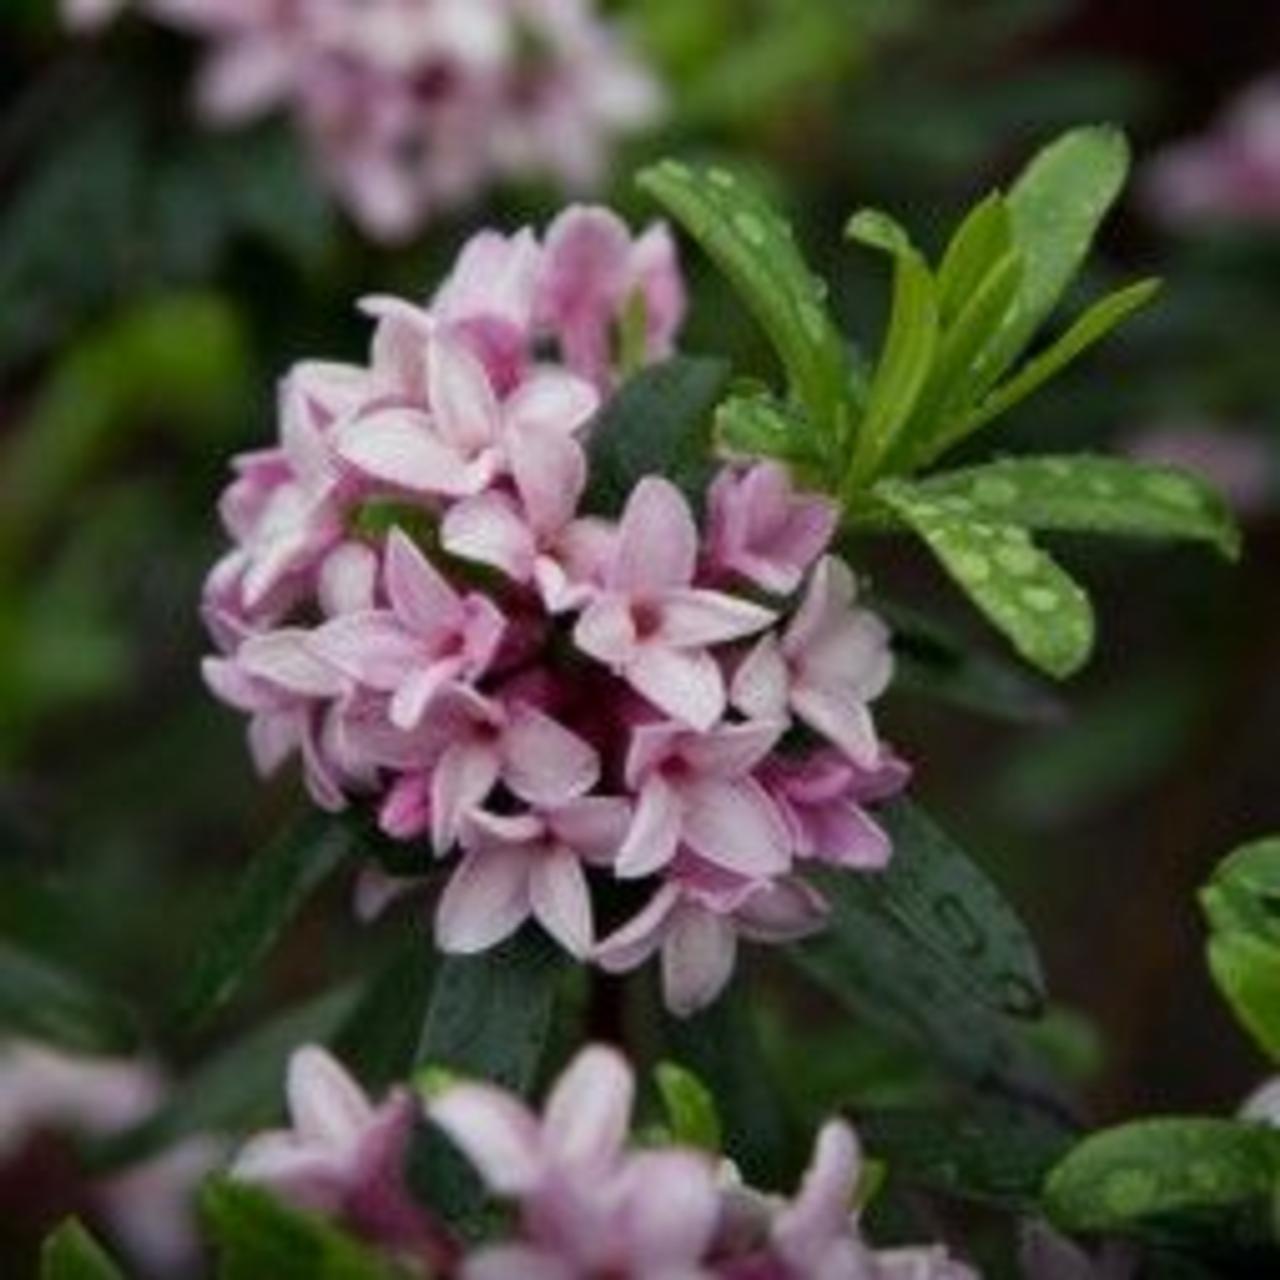 Daphne x transatlantica 'Pink Fragrance' plant